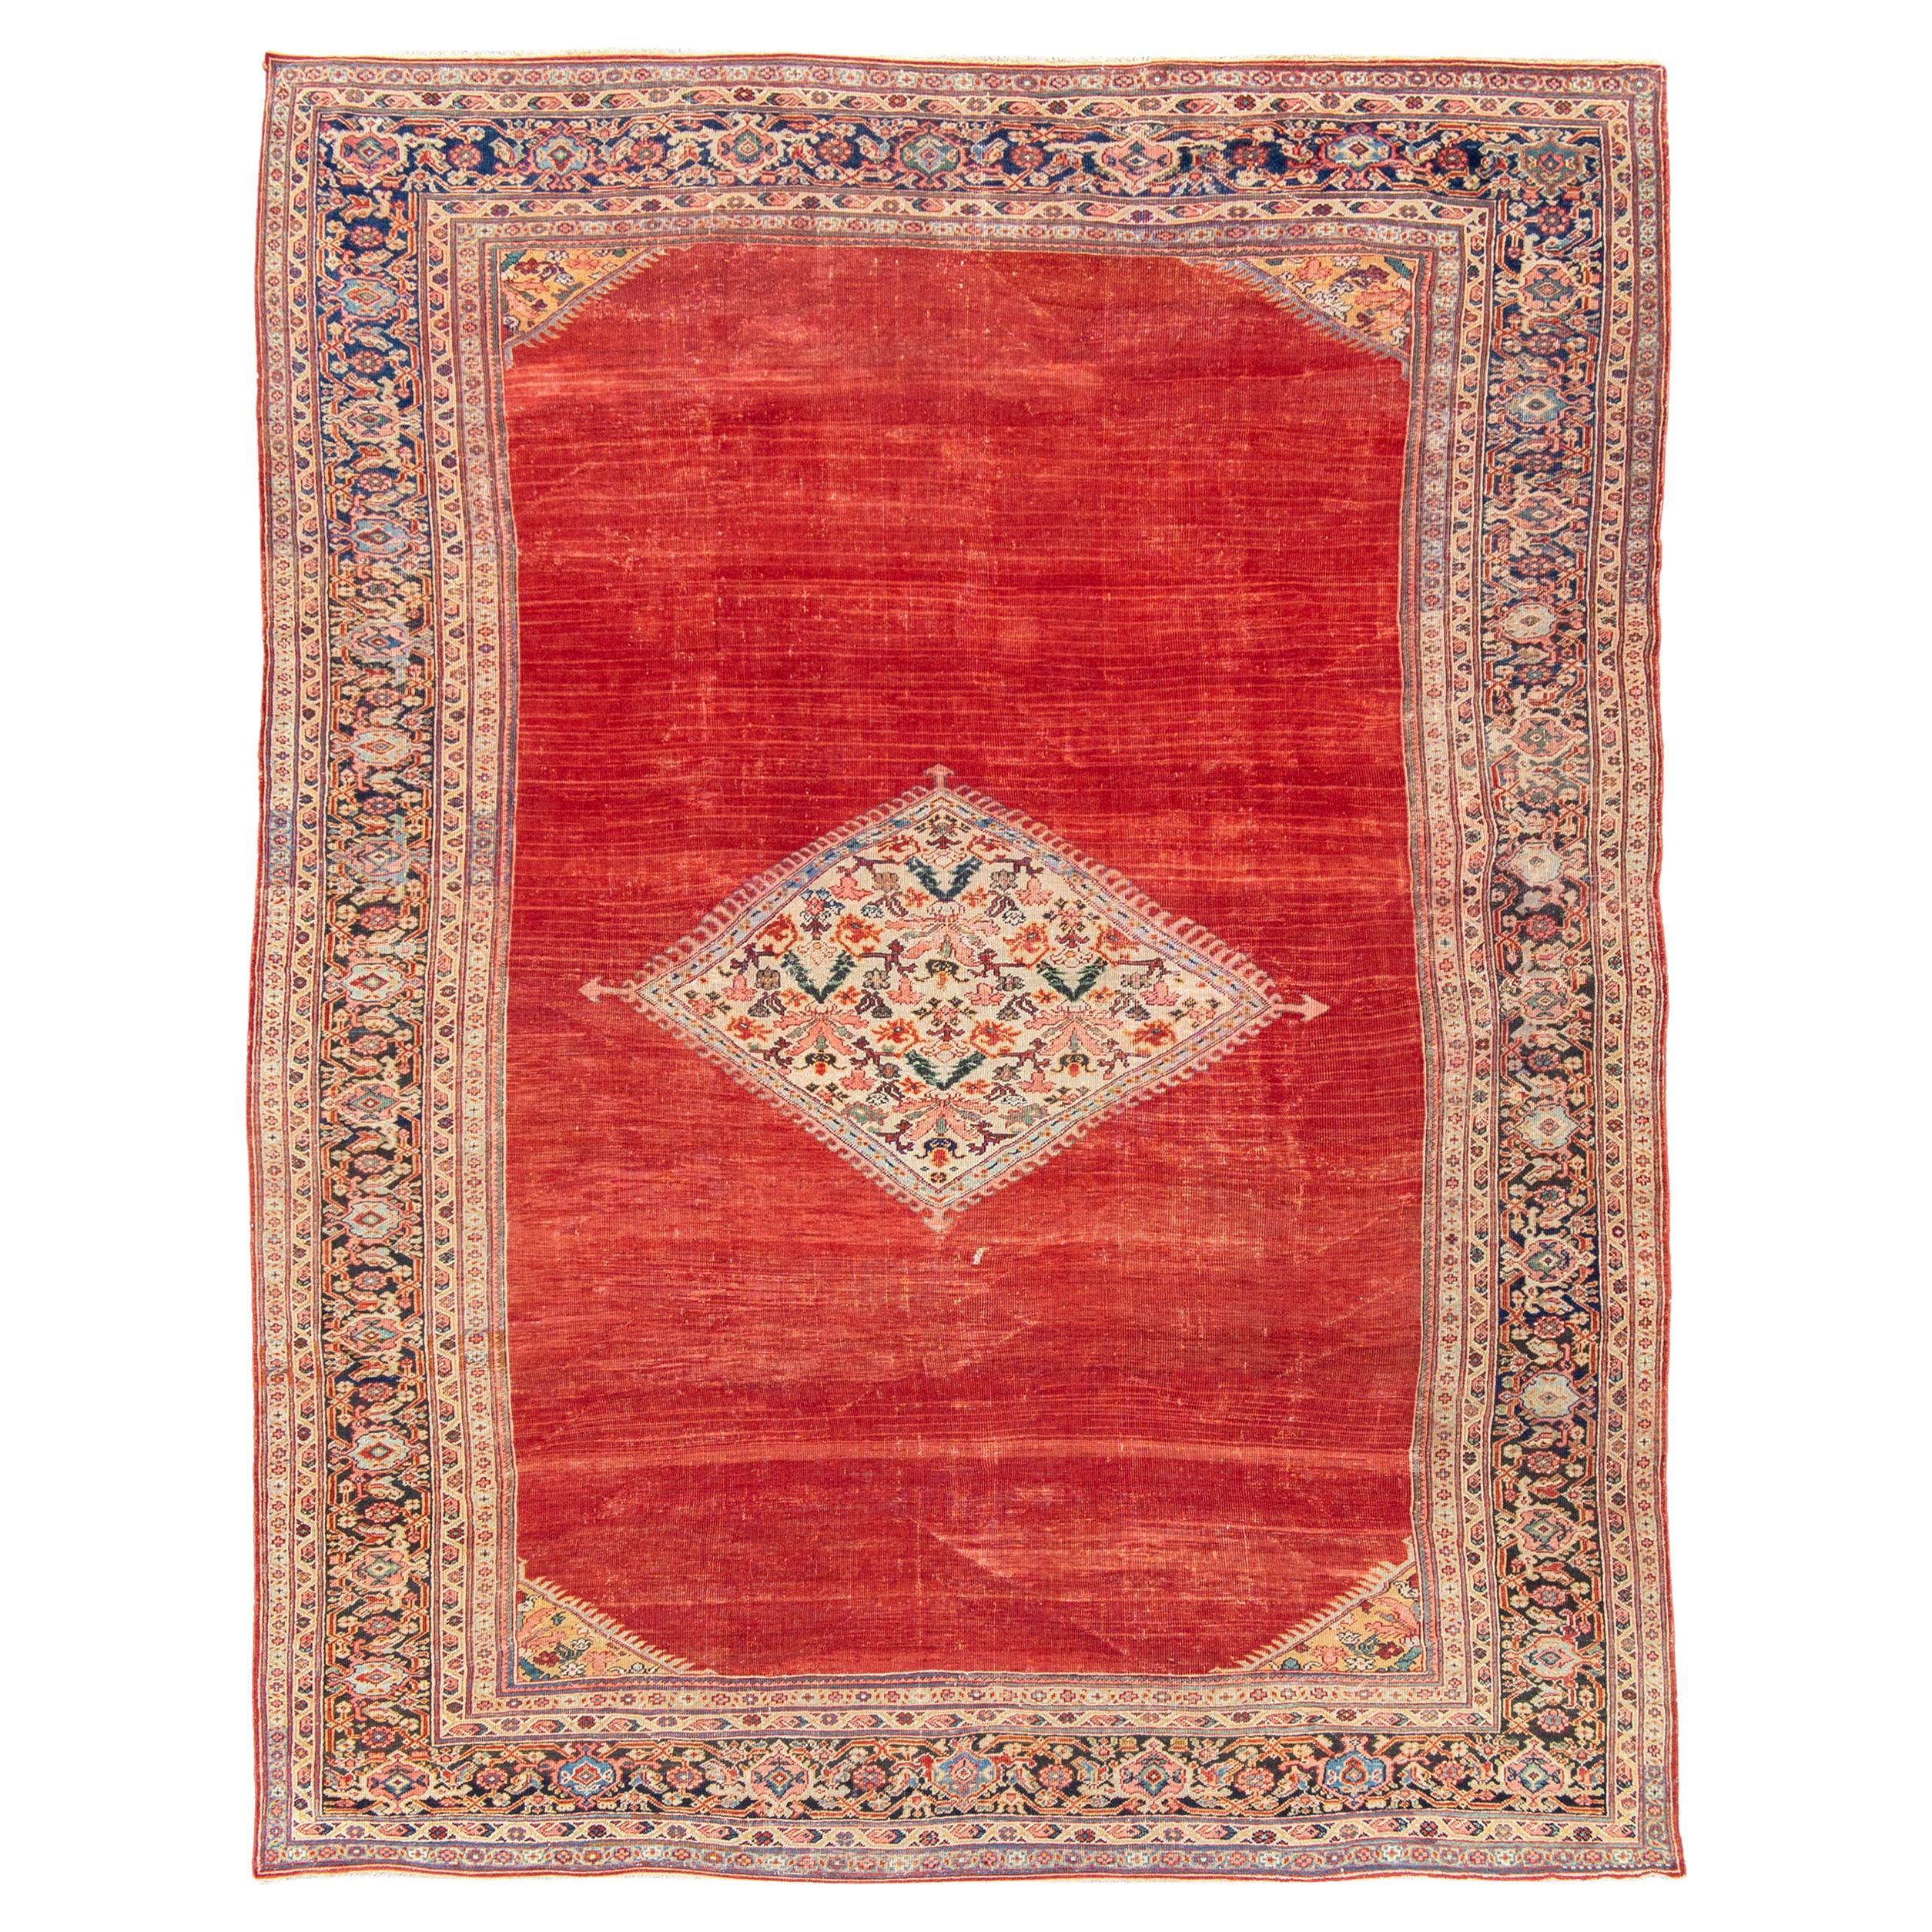 Antique Persian Mahal Carpet, c. 1900